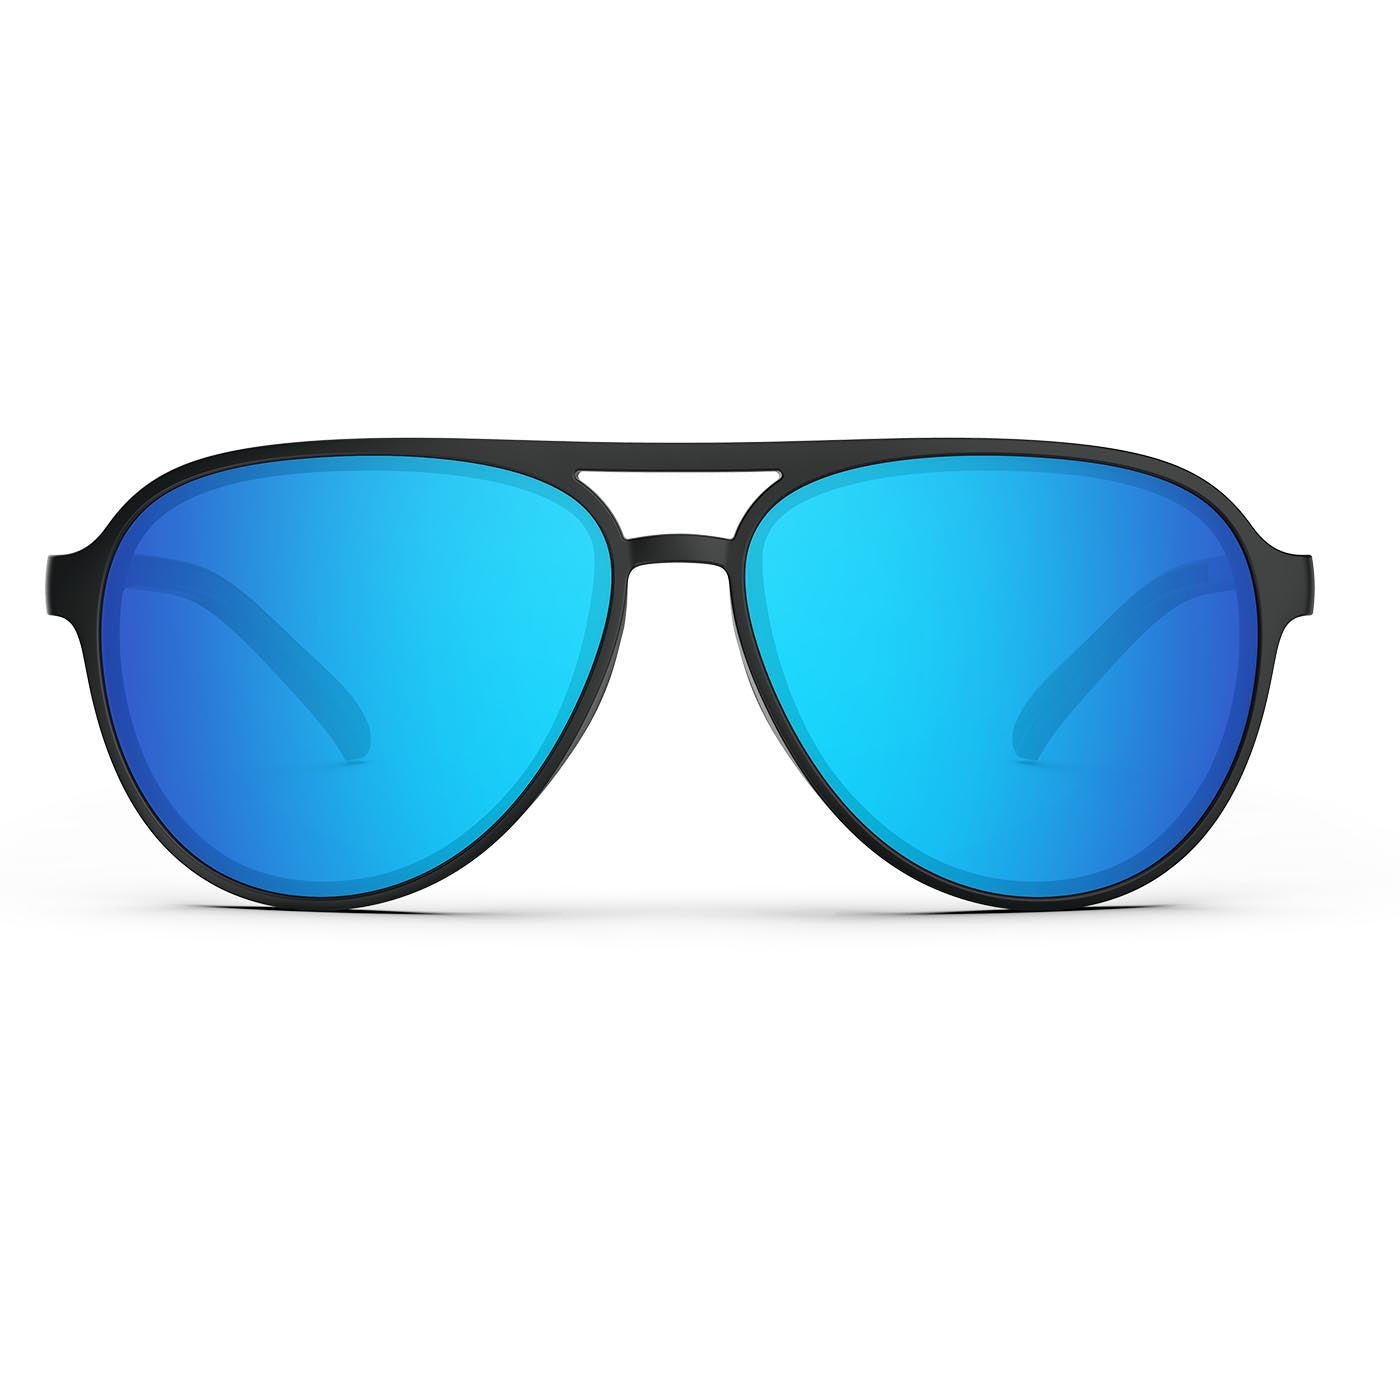 Torege ‘Blue Ridge’ Polarized Aviator Sunglasses - Lifetime Warranty - Men & Women Sports Glasses for Fishing, Boating, Beach, Golf, & Driving